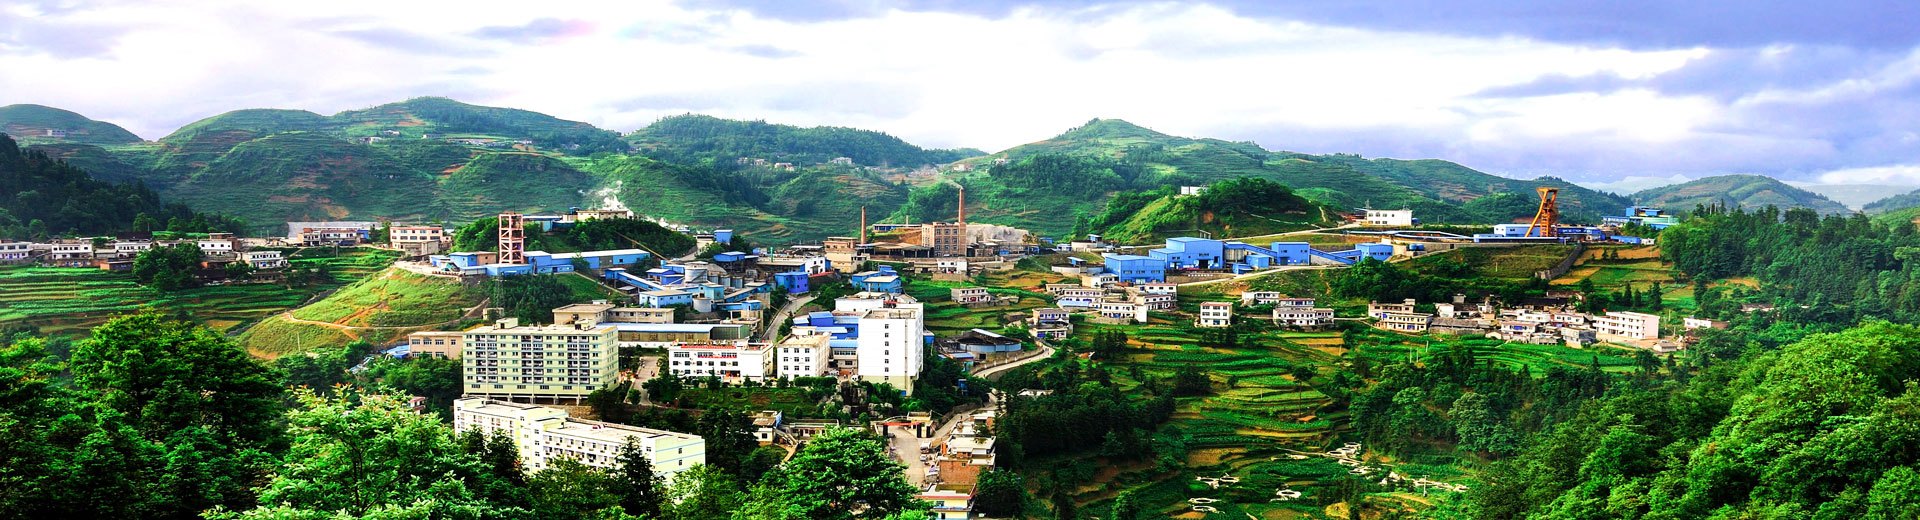 Shuiyindong Gold Mine